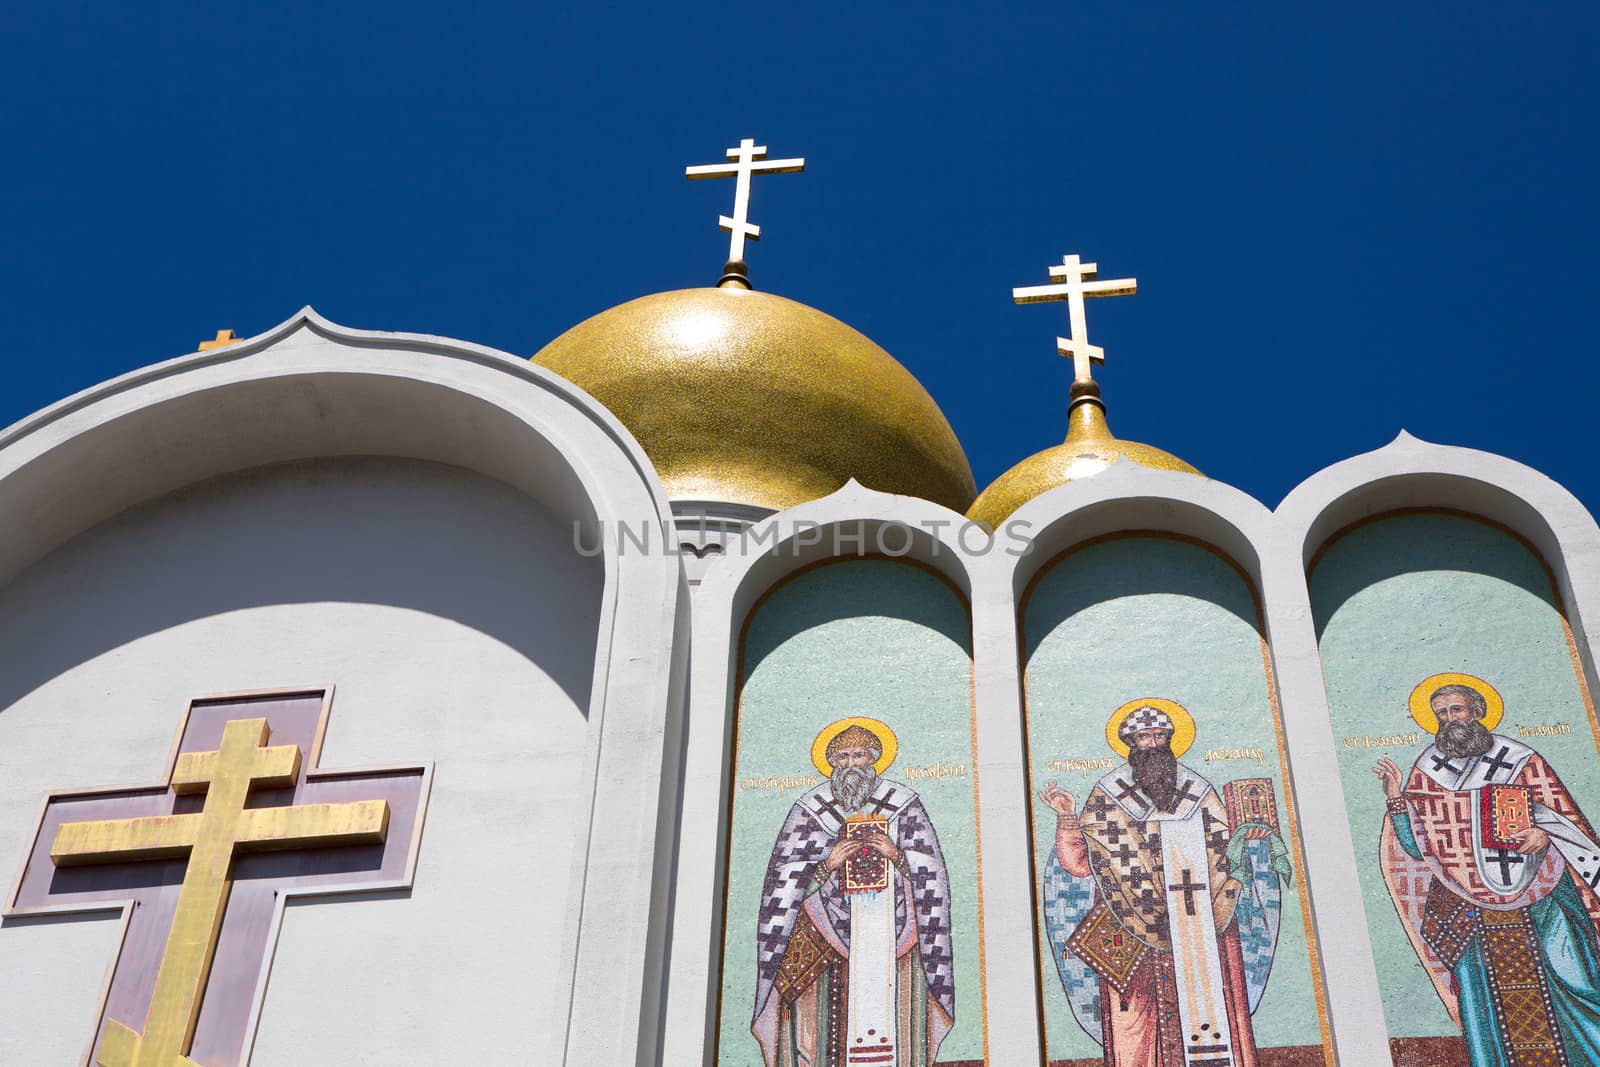 Orthodox Church in San Francisco by watchtheworld